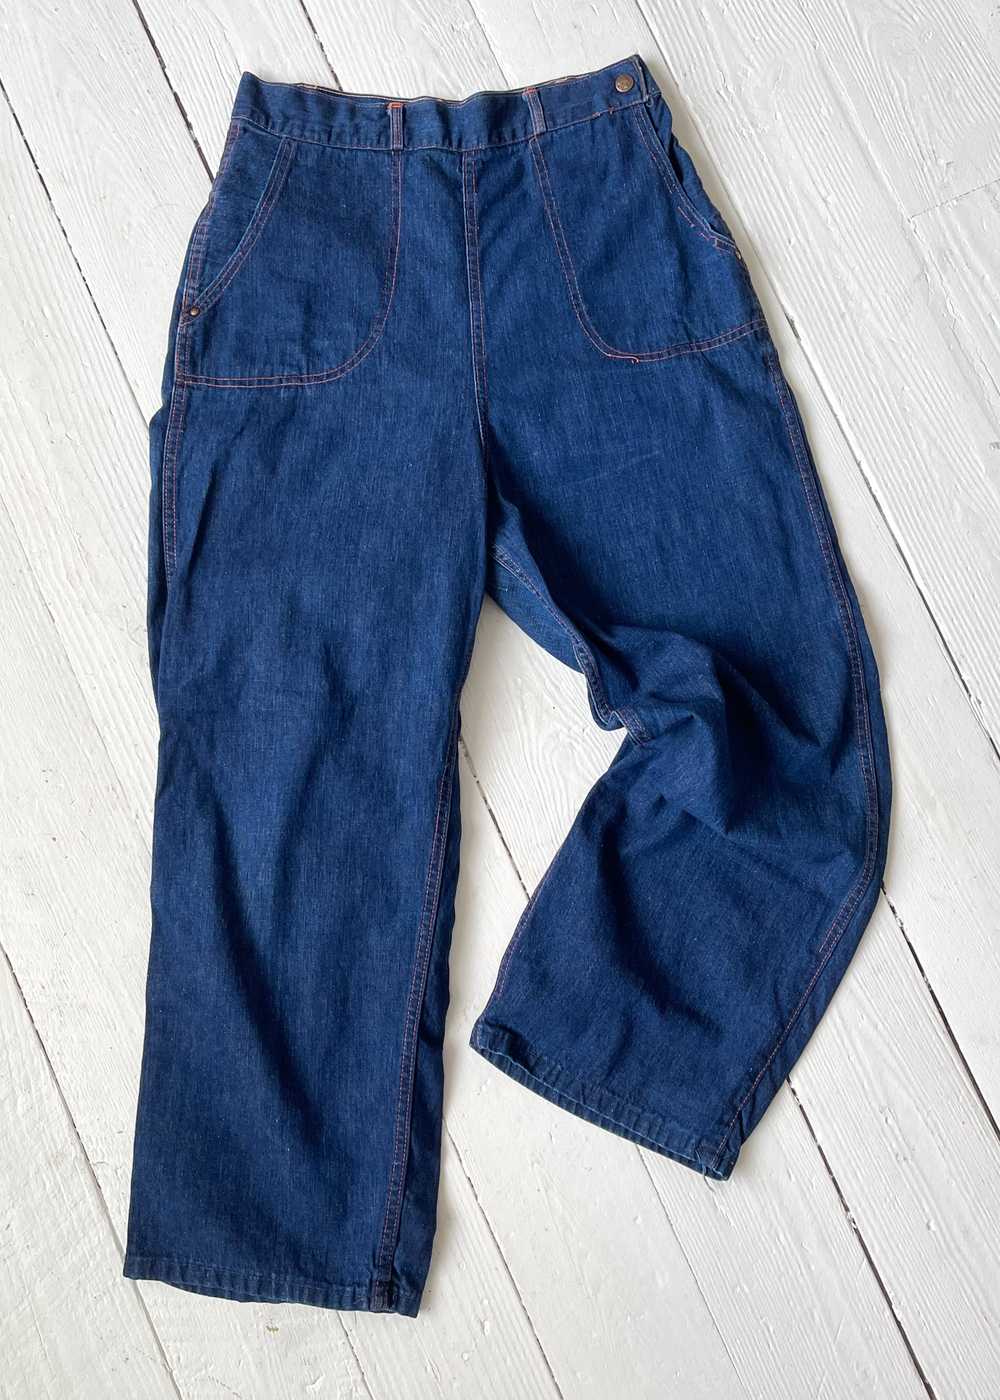 Vintage 1950s Side Zip Jeans - image 1